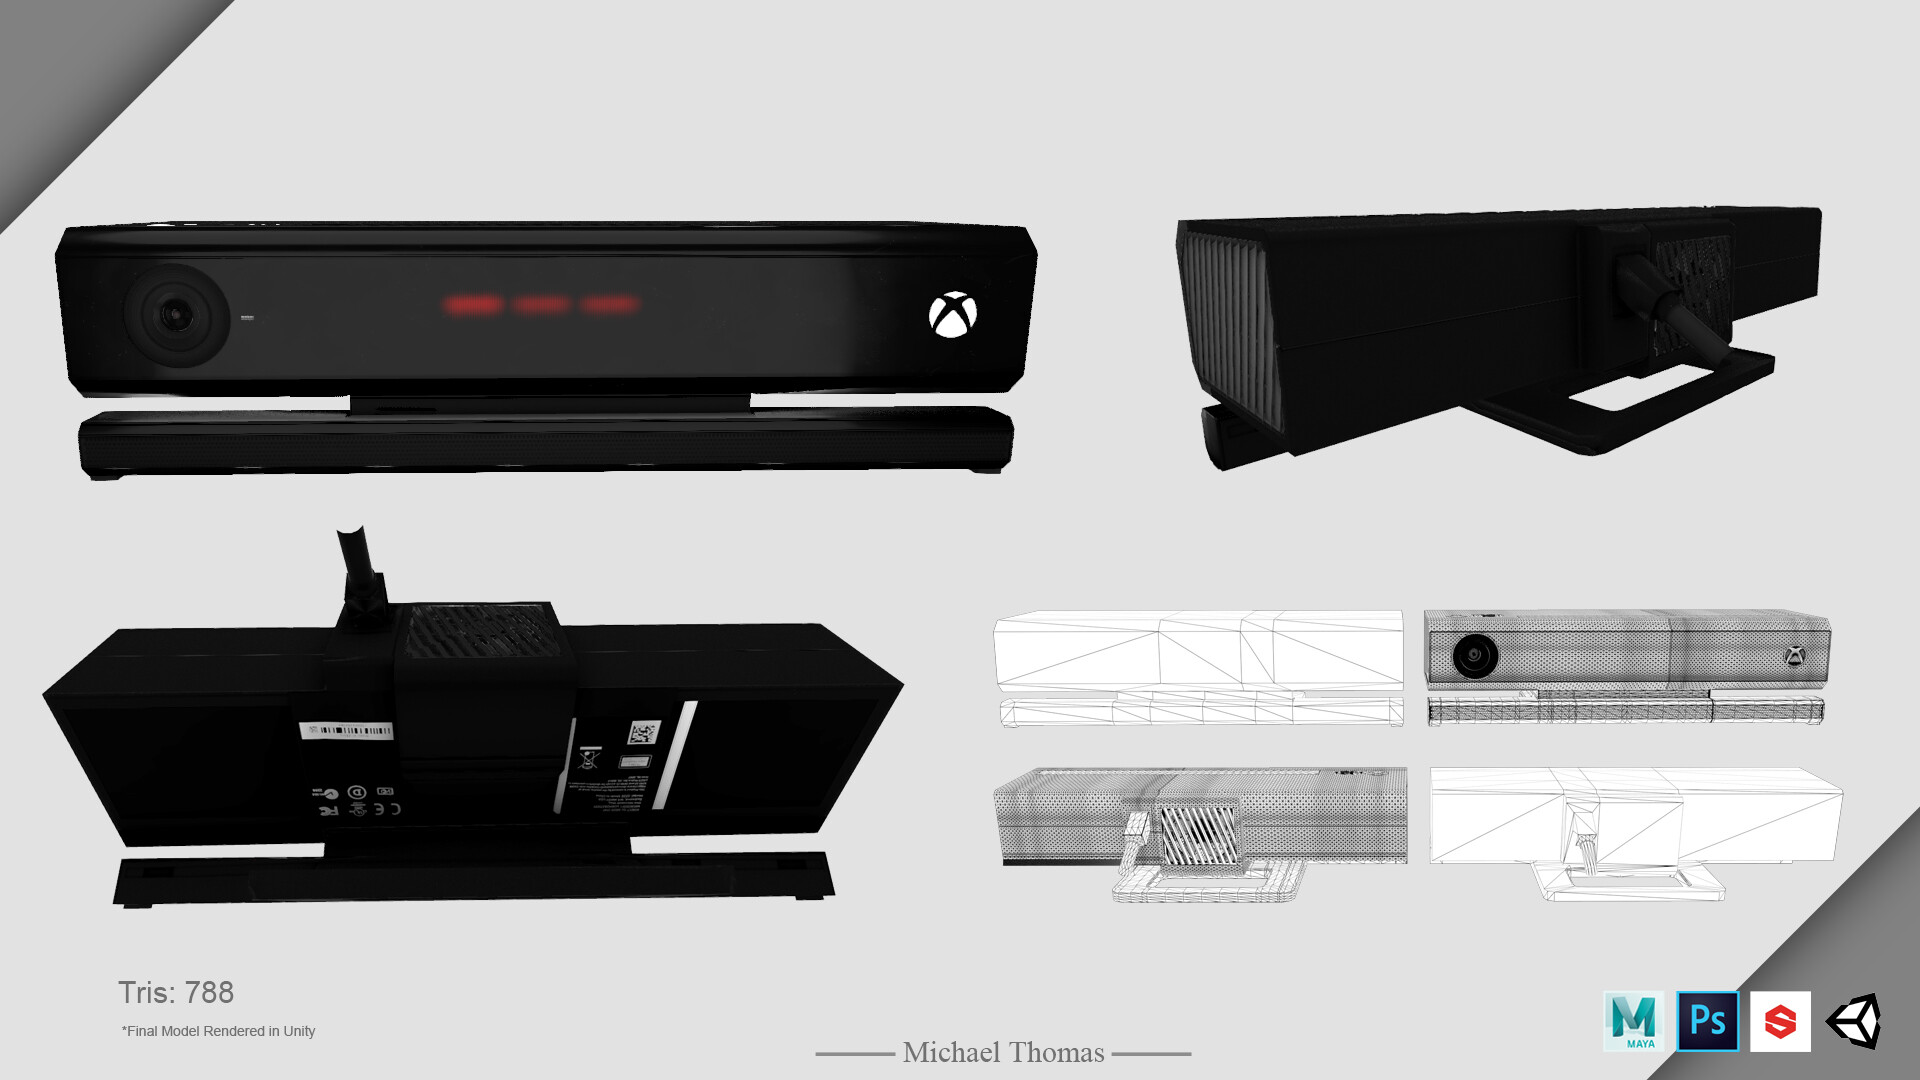 Michael Thomas - Xbox One Kinect